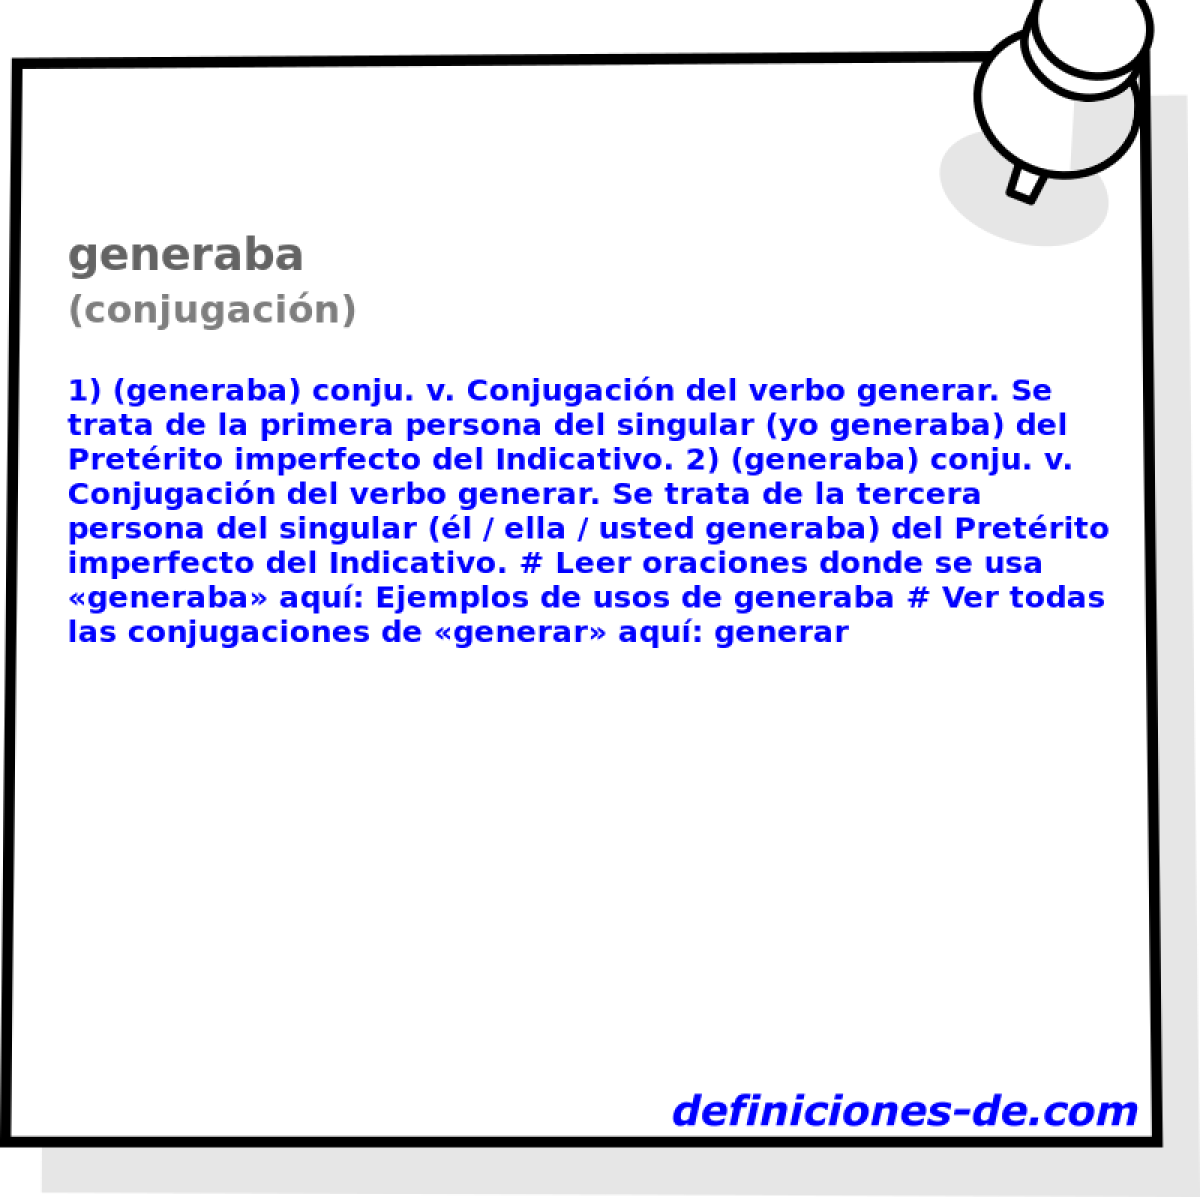 generaba (conjugacin)